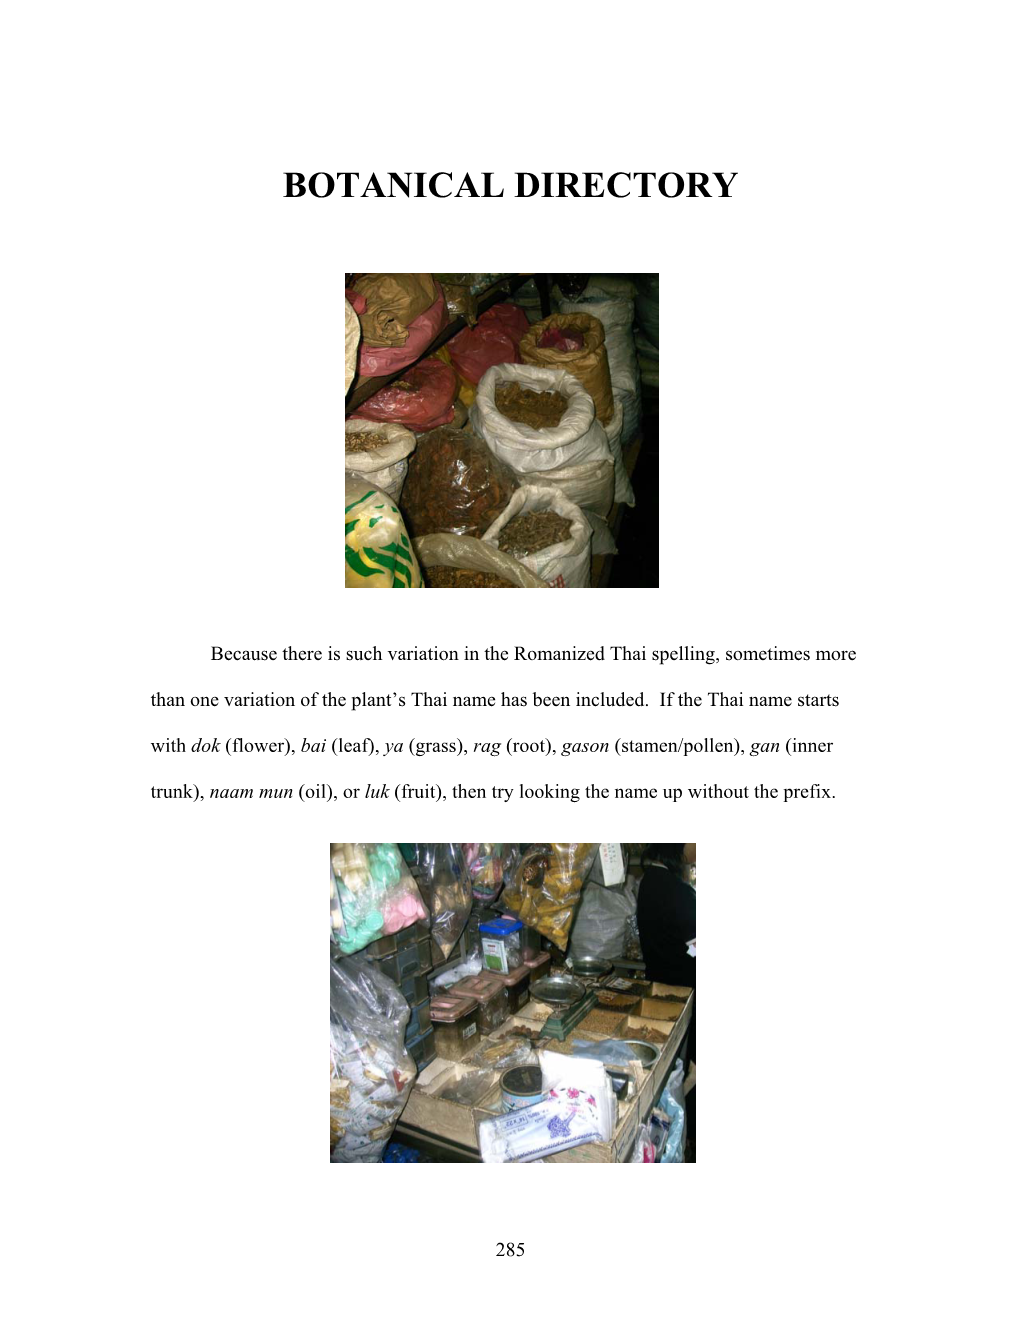 Botanical Directory